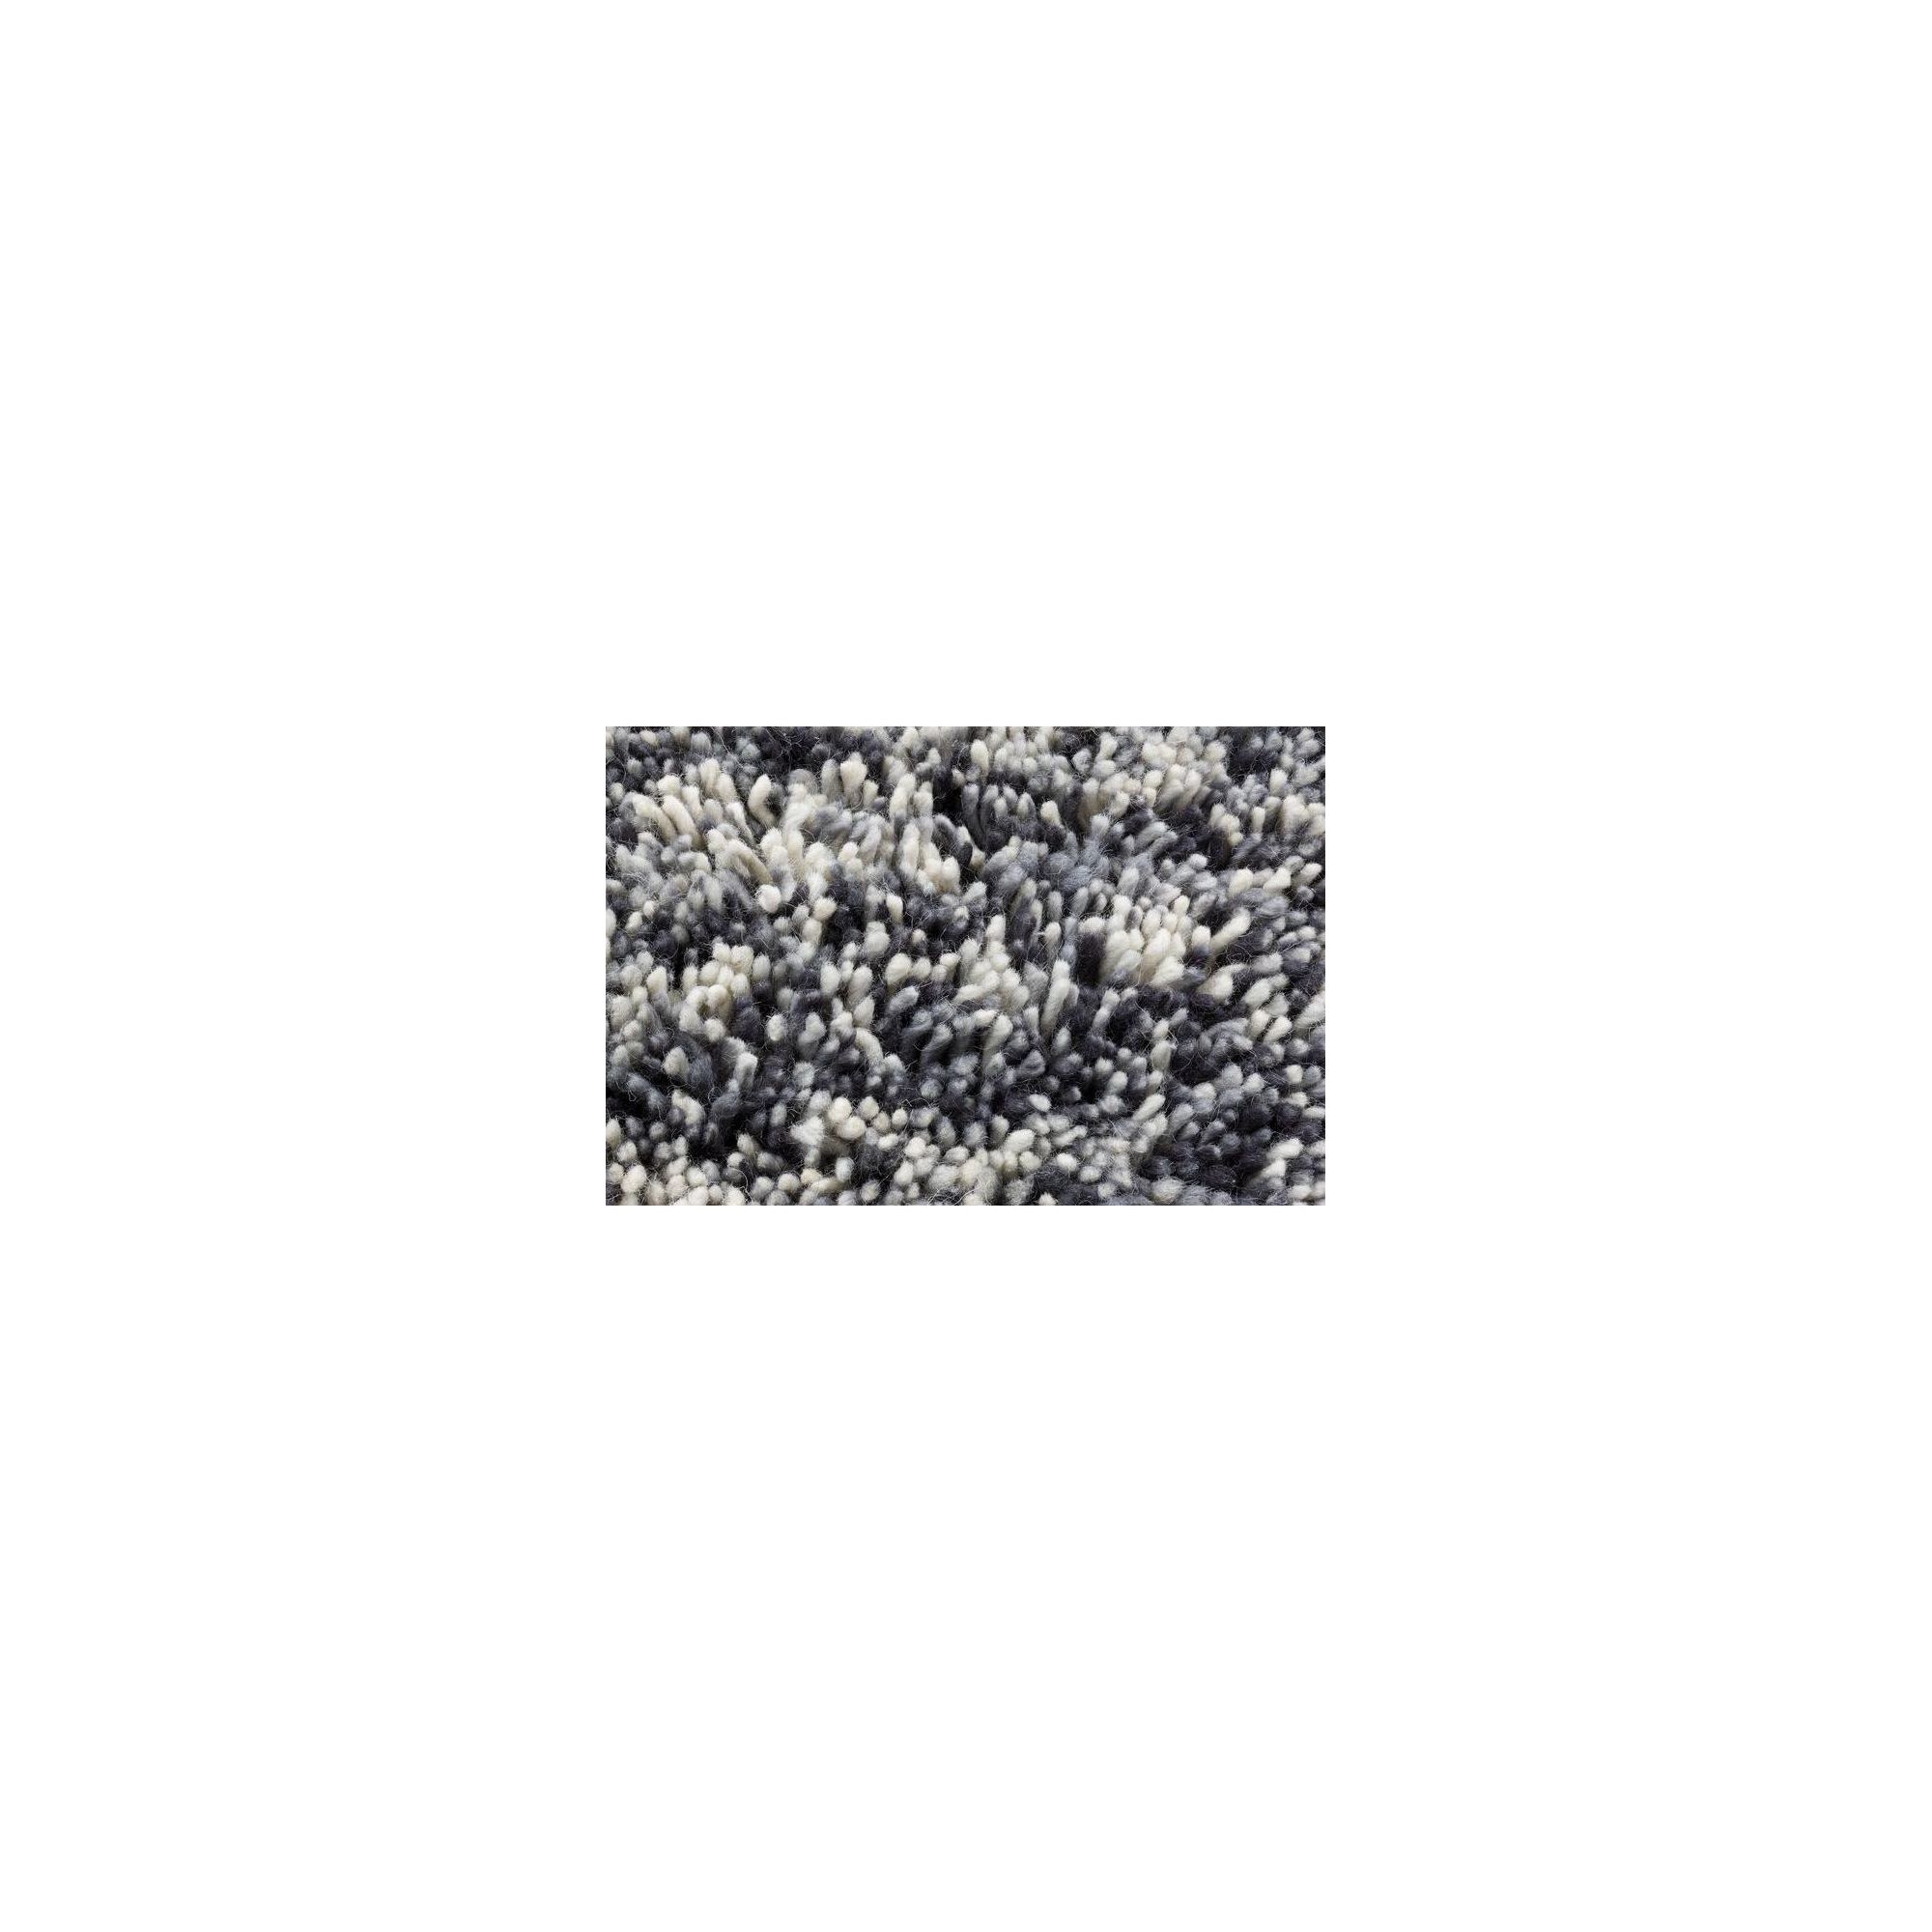 Linie Design Coral Granite Shag Rug - 300cm x 200cm at Tesco Direct